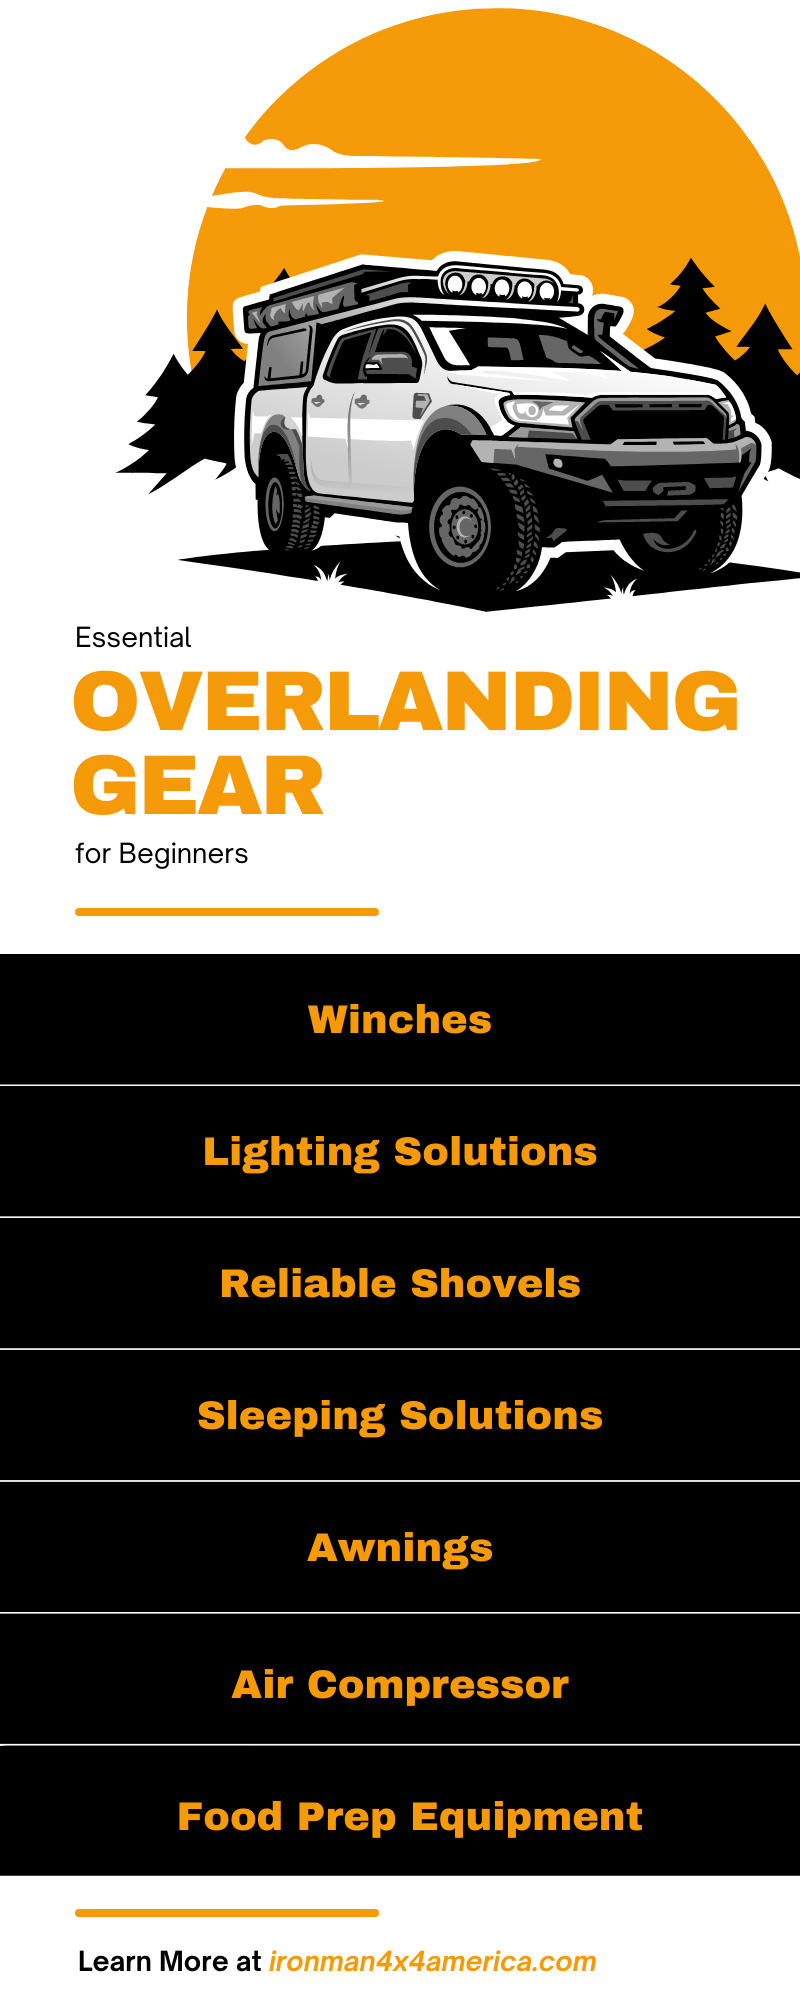 Essential Overlanding Gear for Beginners